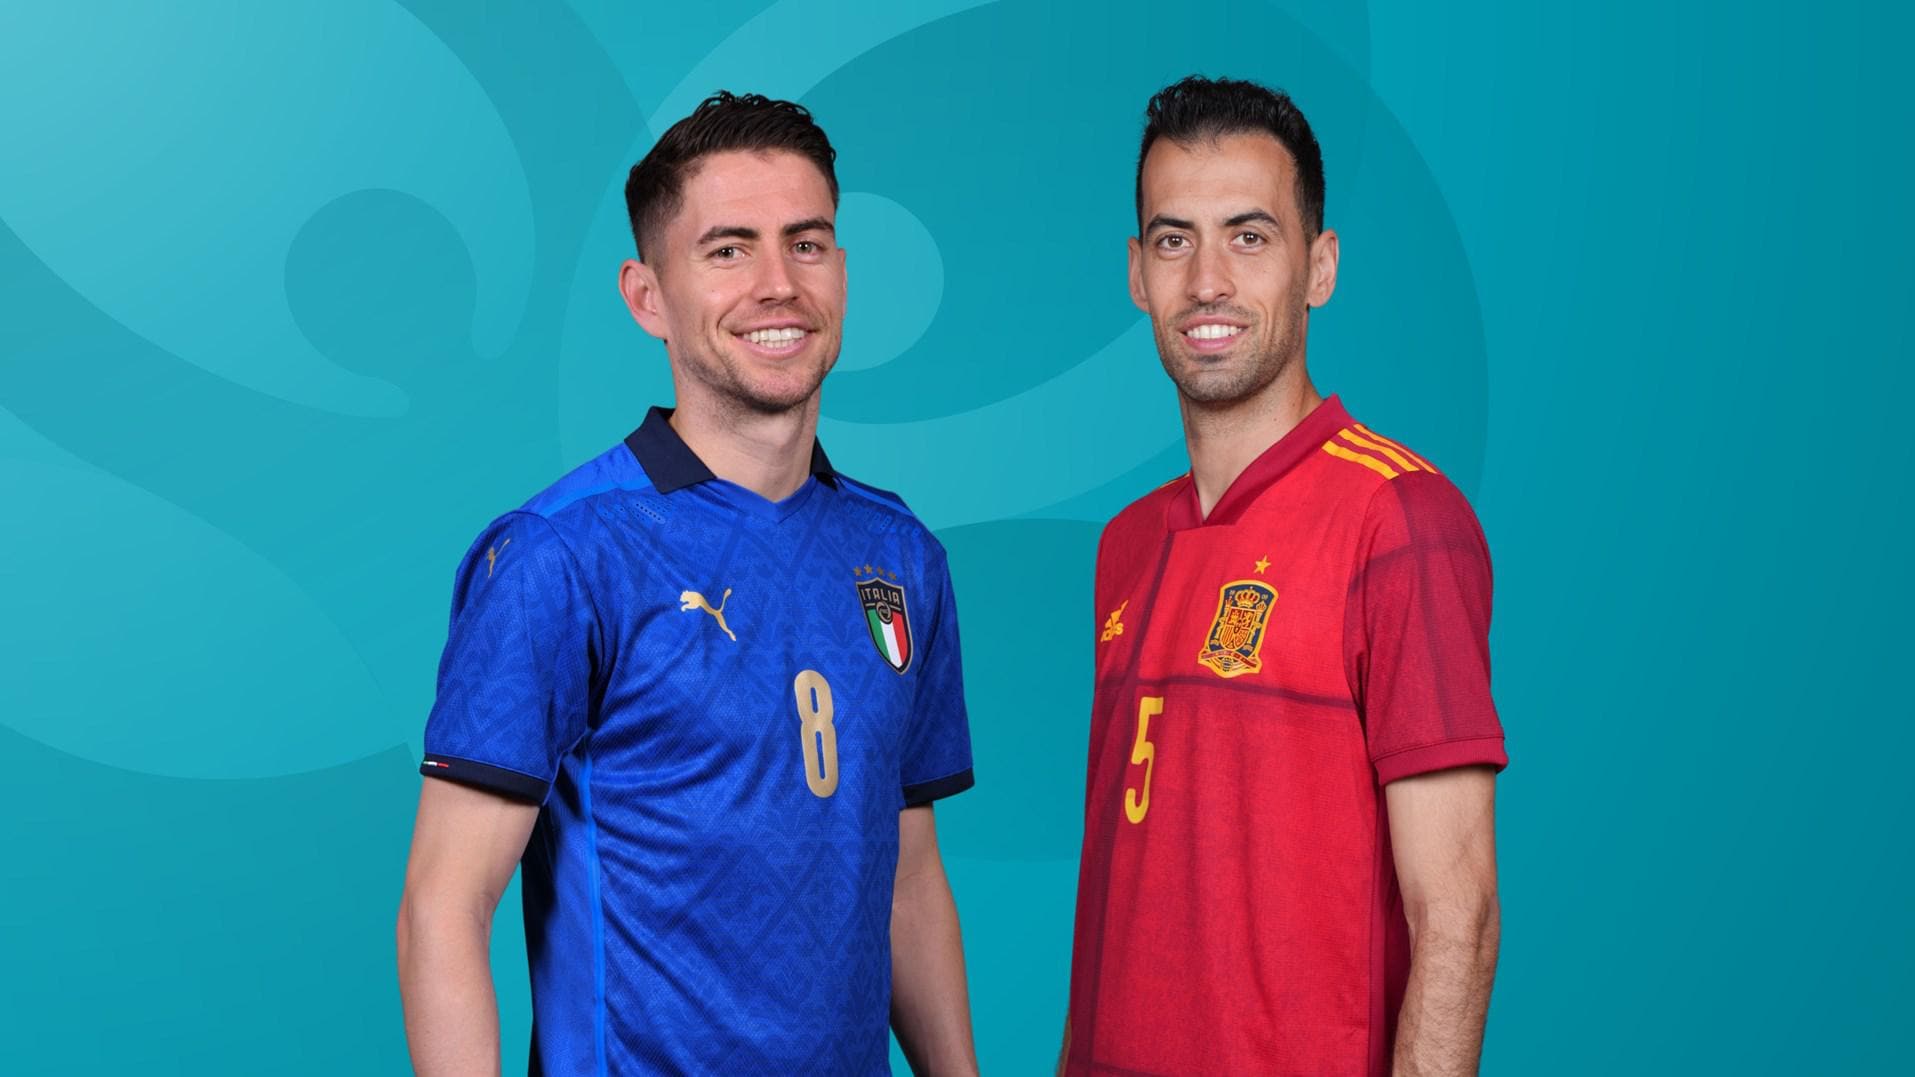 Spain vs italy